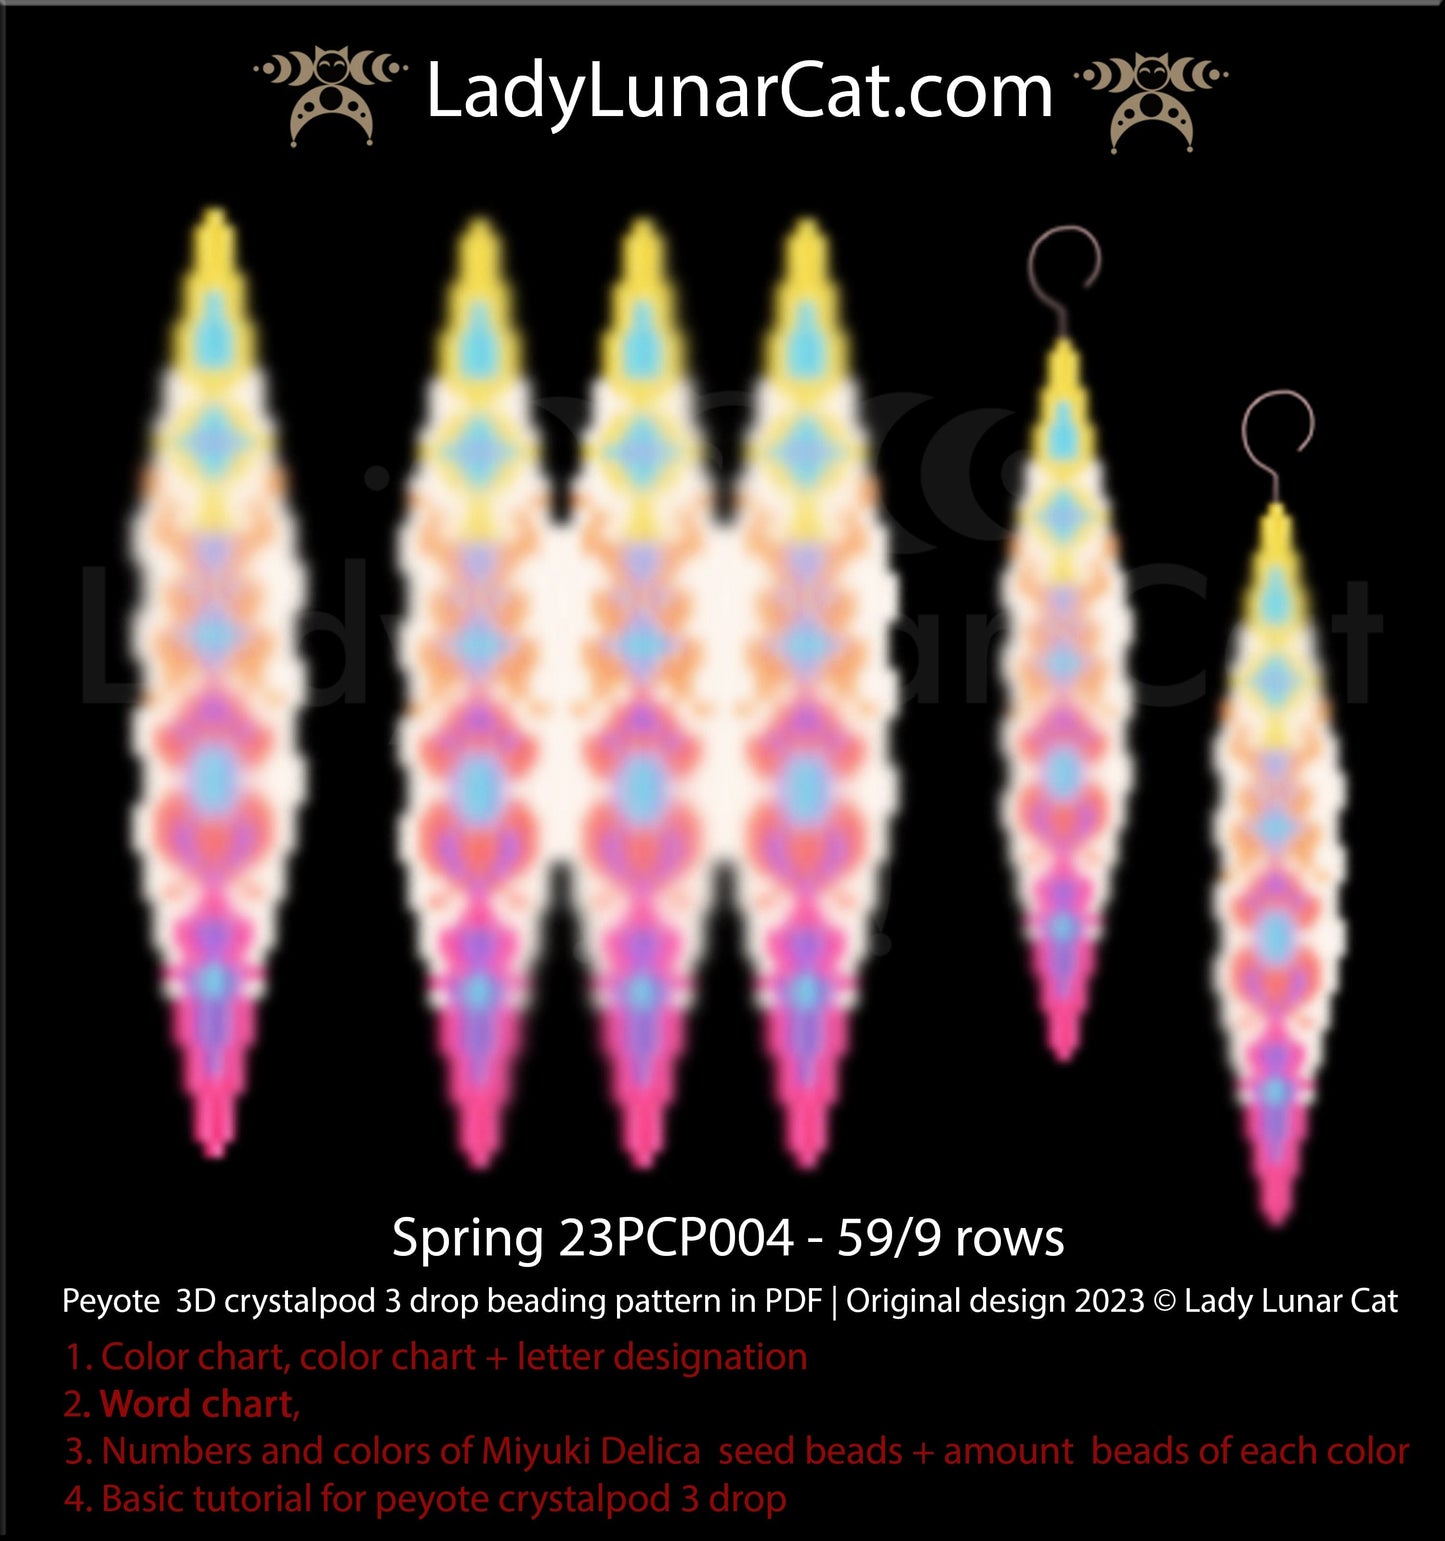 Peyote 3drop pod pattern or crystalpod pattern for beading Spring 23PCP004 LadyLunarCat